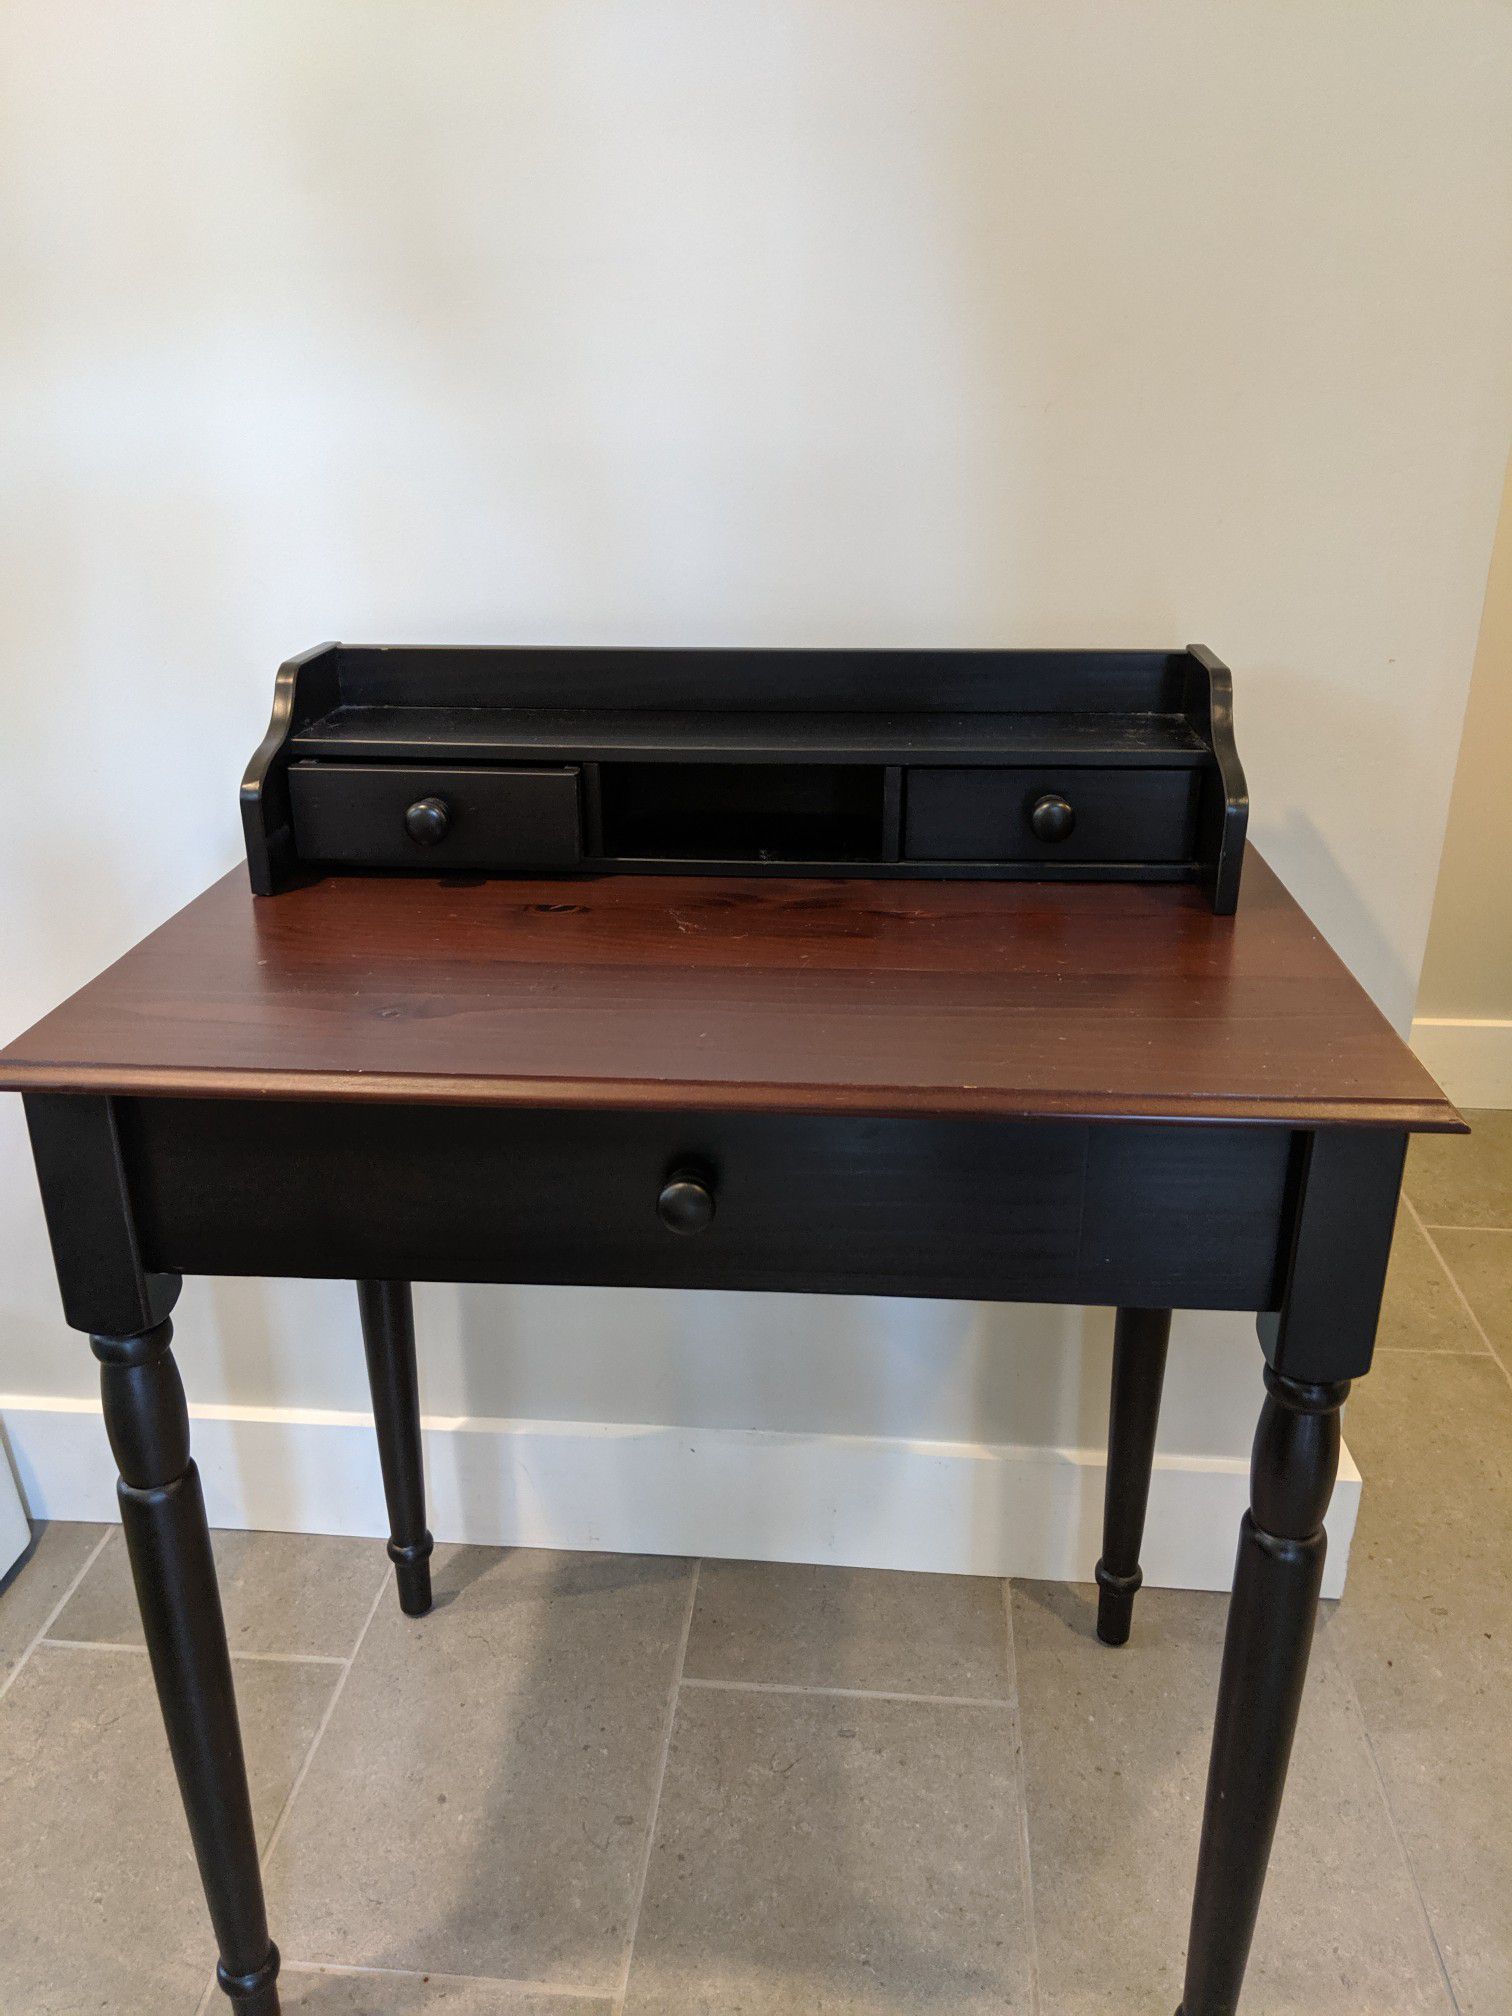 Desk for sale $50